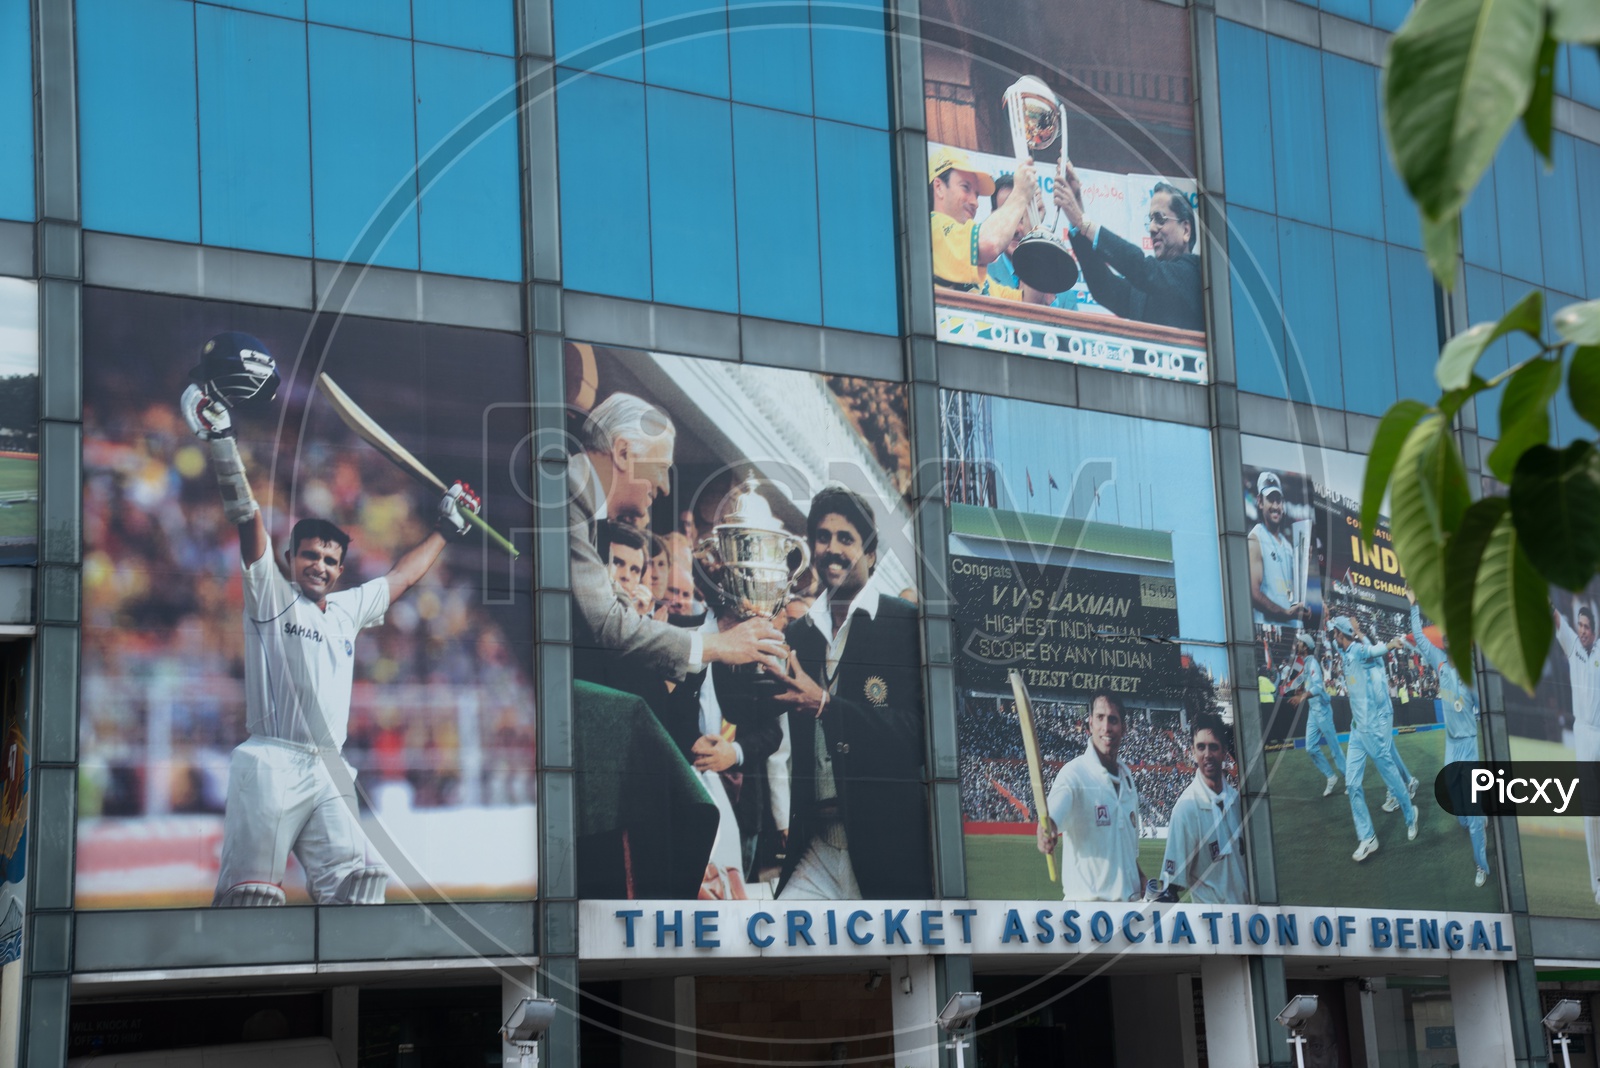 Eden Garden Cricket Stadium in Kolkata of The Cricket Association Of Bengal